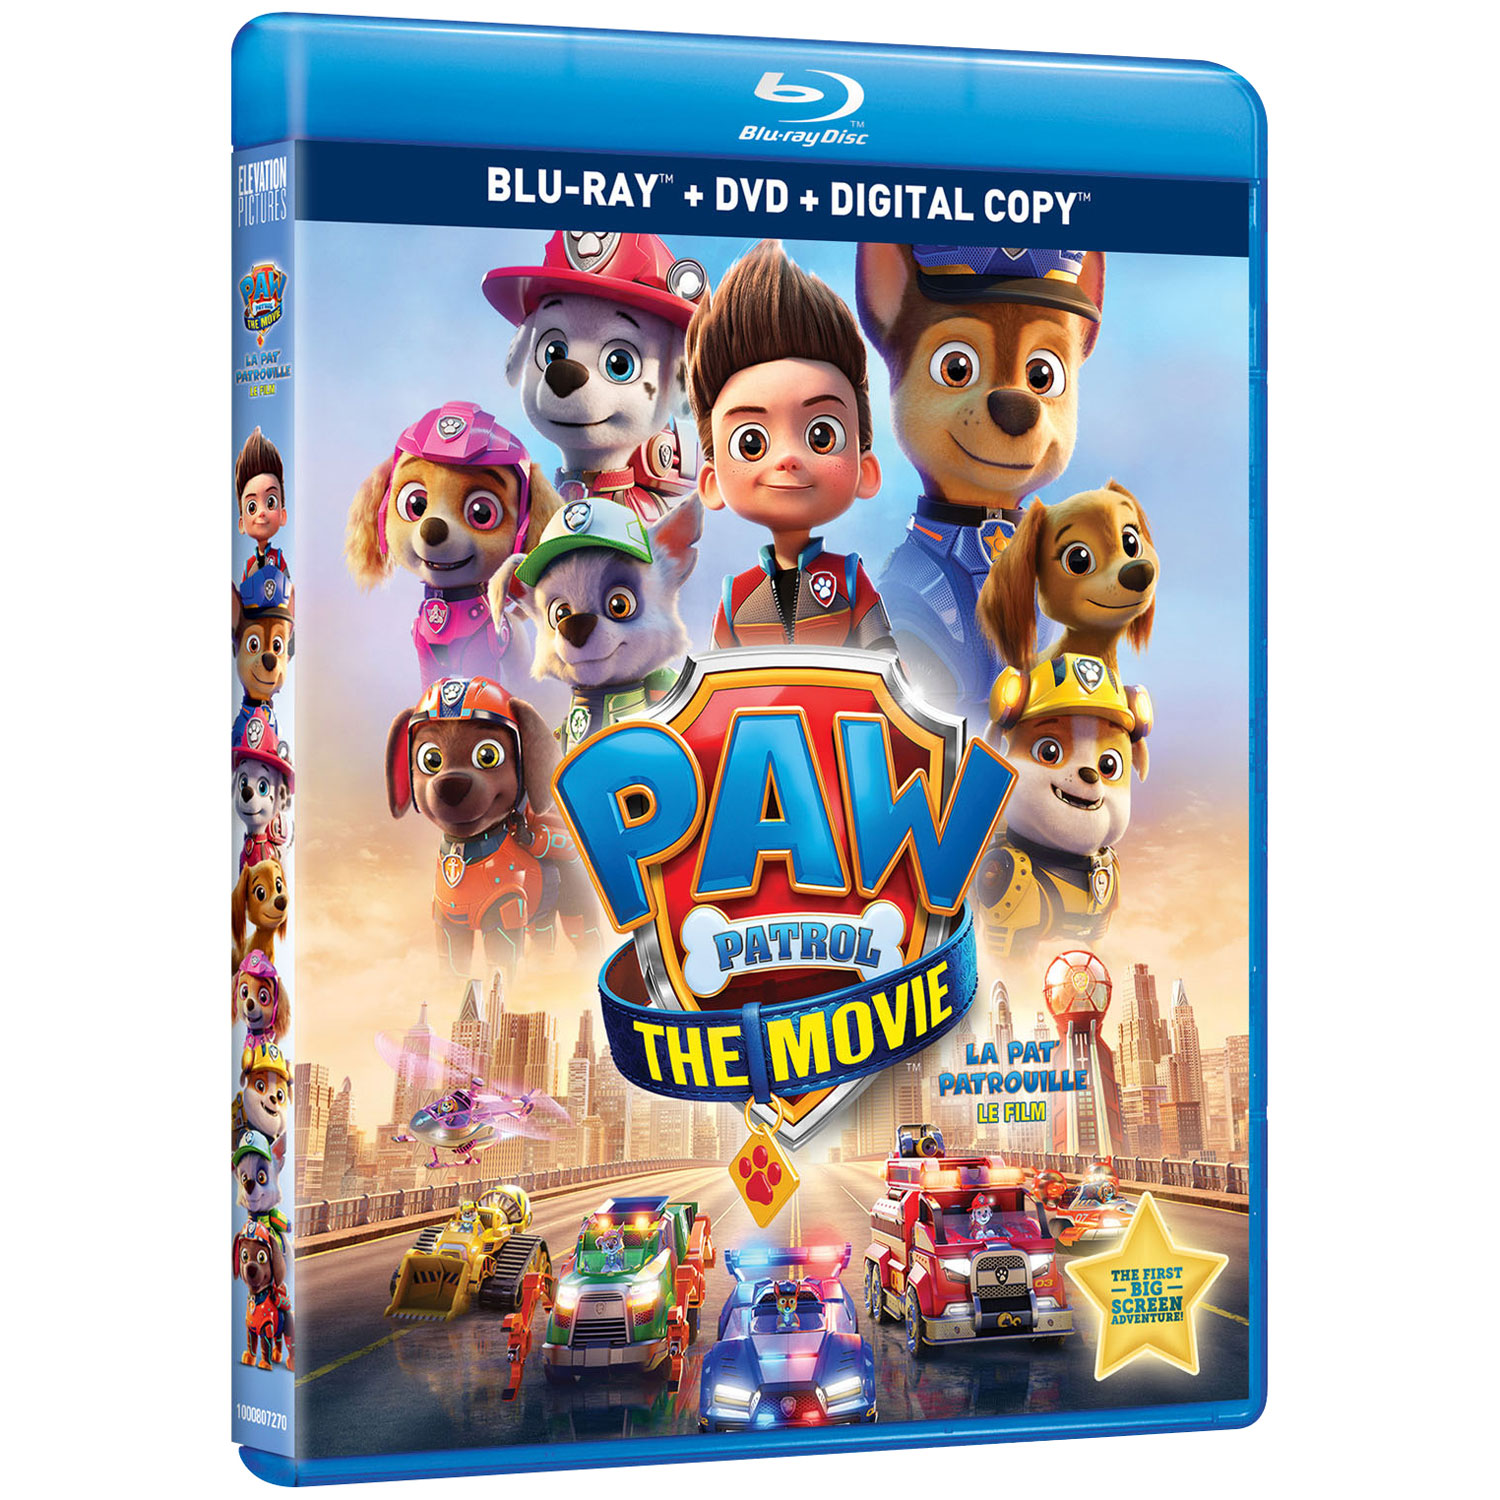 Paw Patrol: The Movie (Blu-ray Combo)